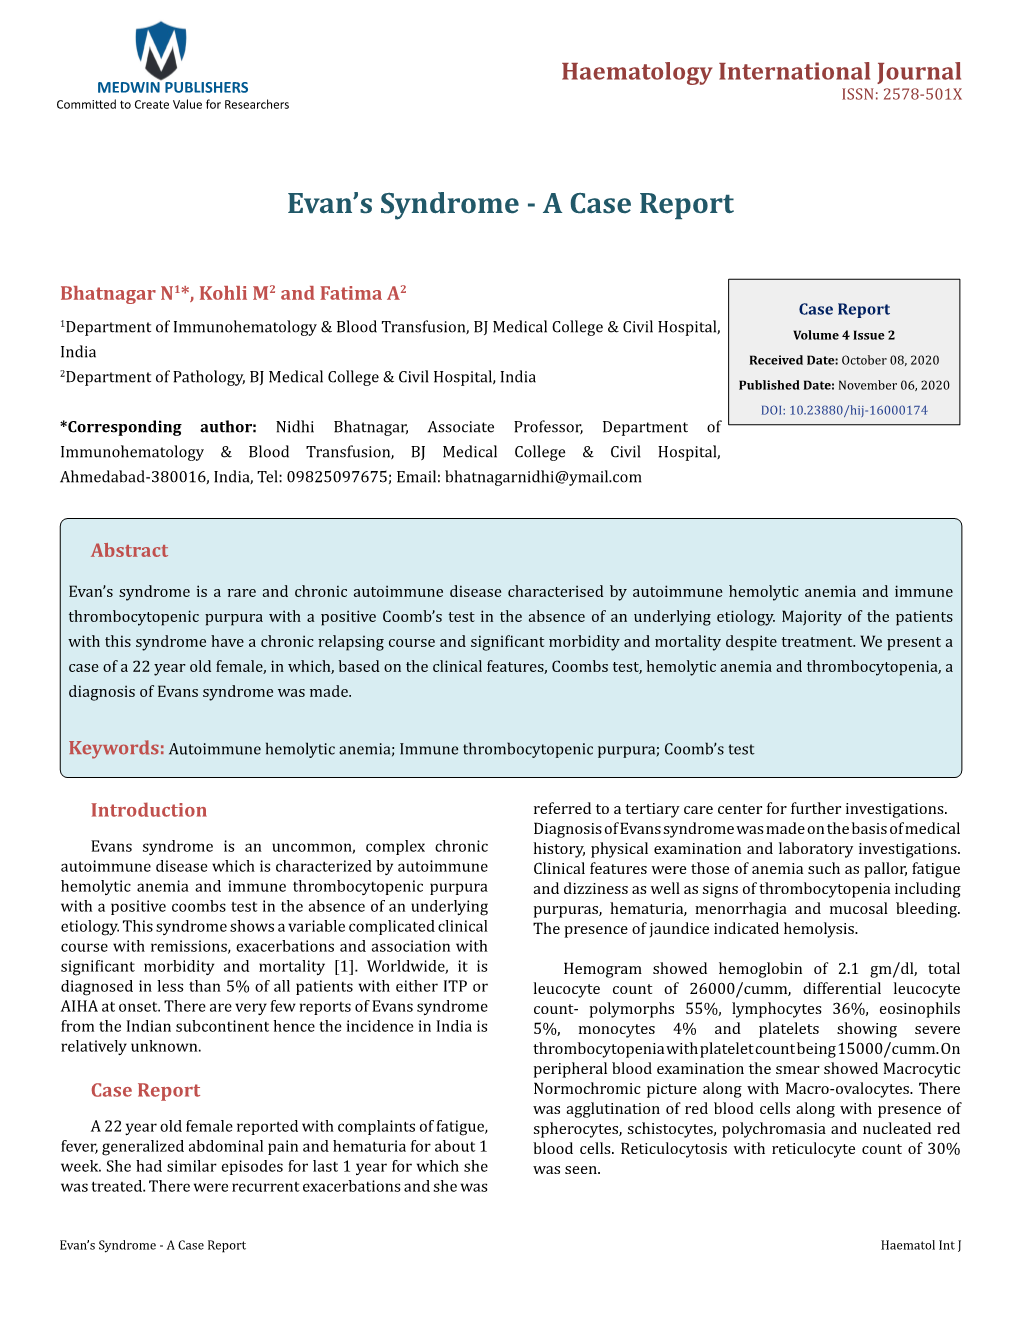 Bhatnagar N, Et Al. Evan's Syndrome